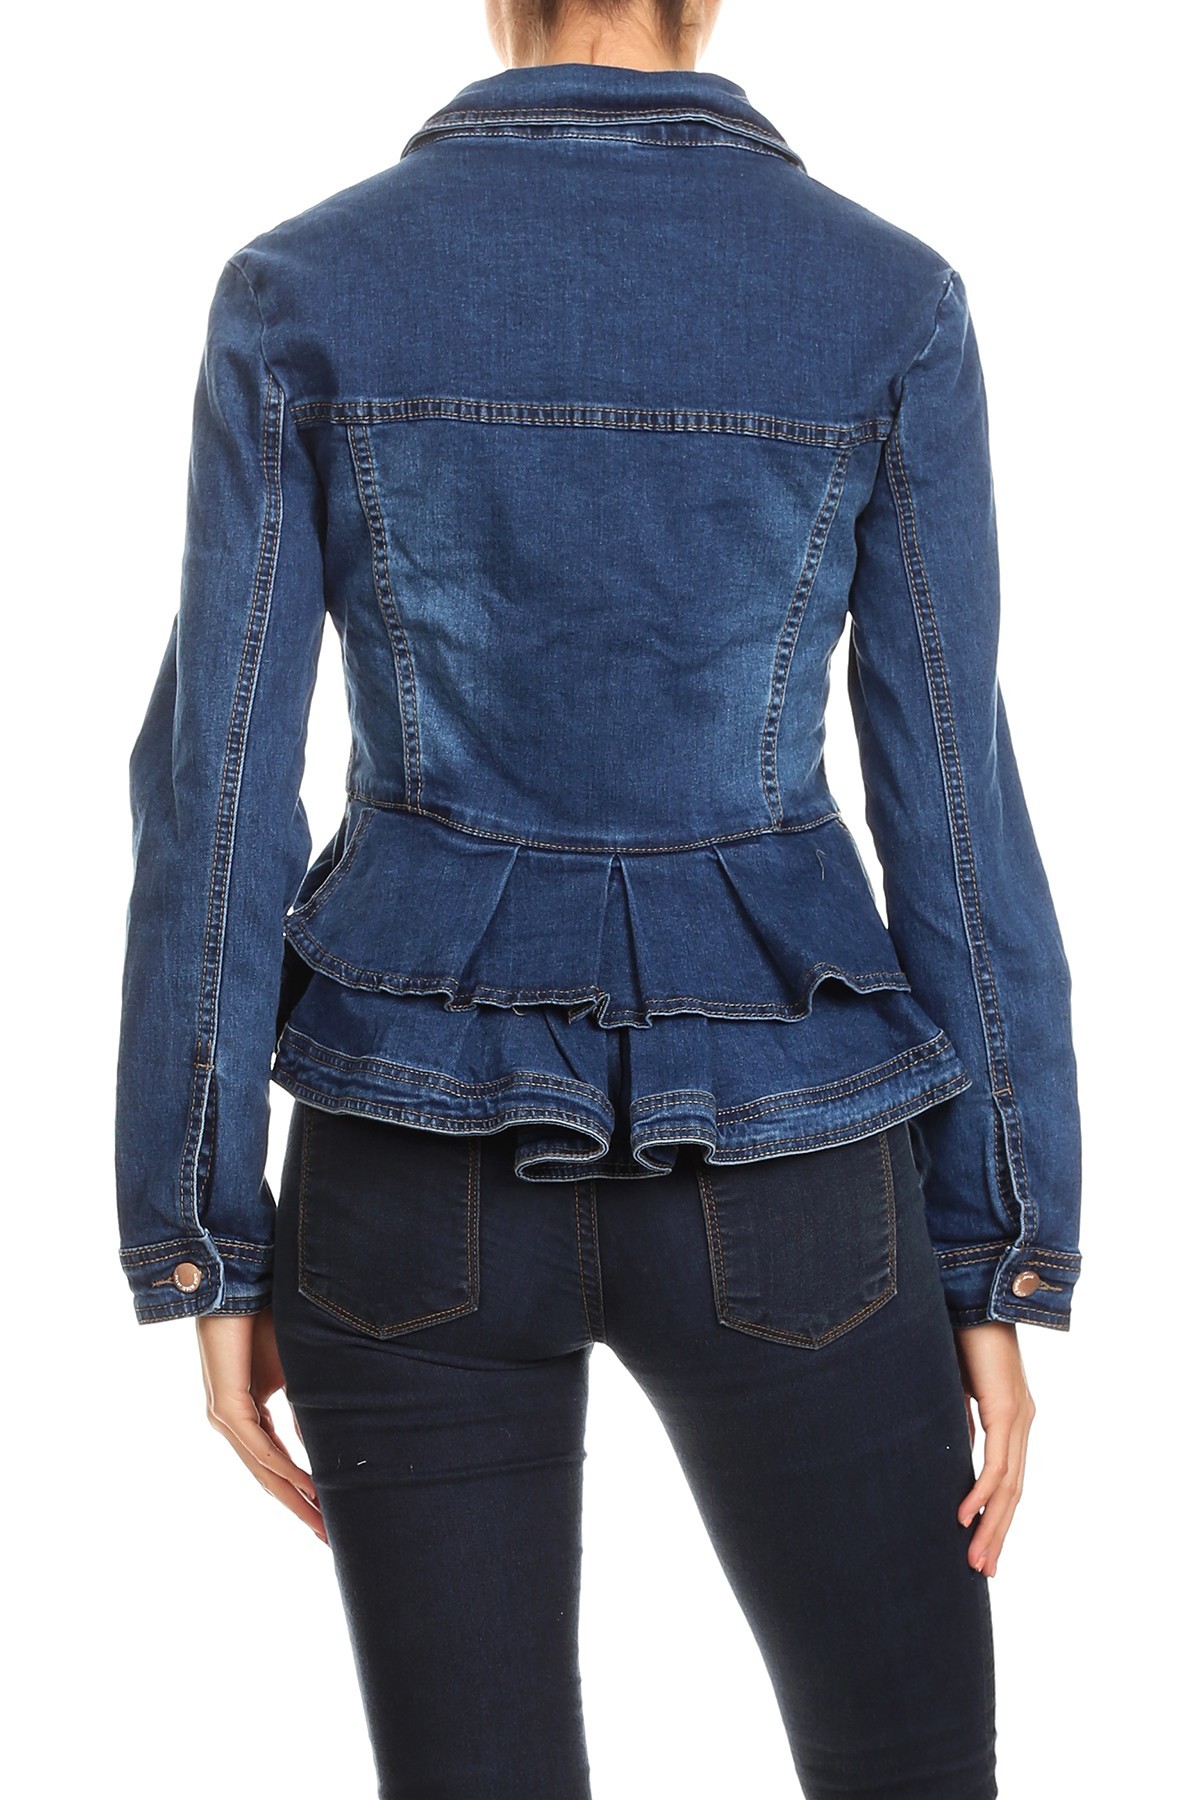 Fashion2Love Women's Plus / Juniors Size Premium Denim Premium Bodice Long Sleeve Jacket - image 4 of 8